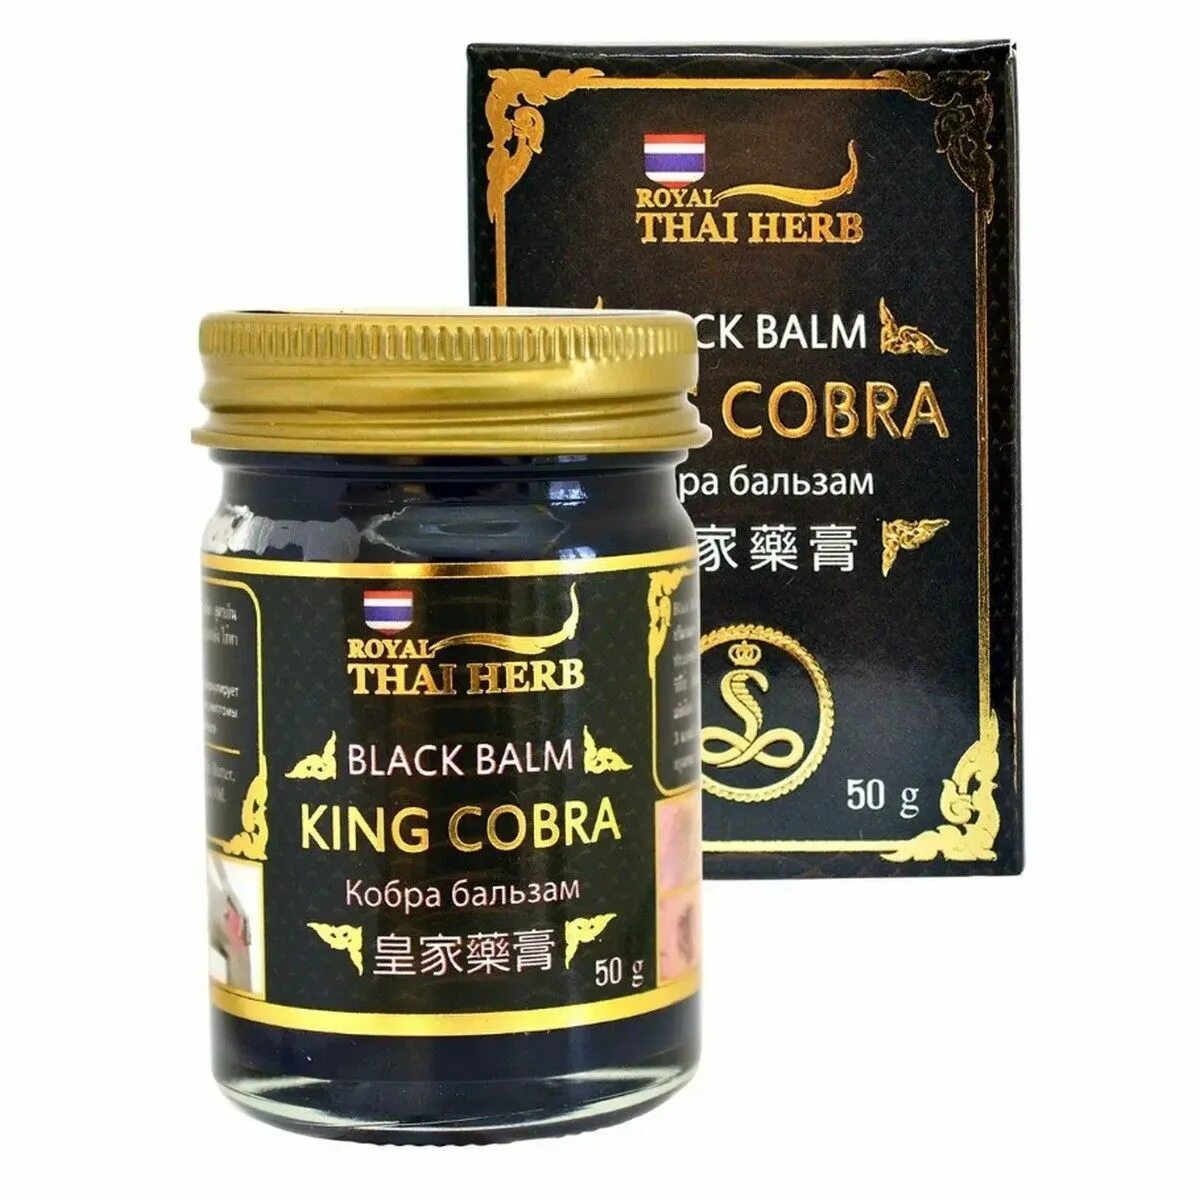 Cobra balm. Тайский черный бальзам с ядом кобры, Cobra Black Balm Original, 50 гр. Black Balm King Cobra Royal Thai herbъ. Бальзам Кобра из Тайланда черный. Тайский черный бальзам Кобра 200 гр.